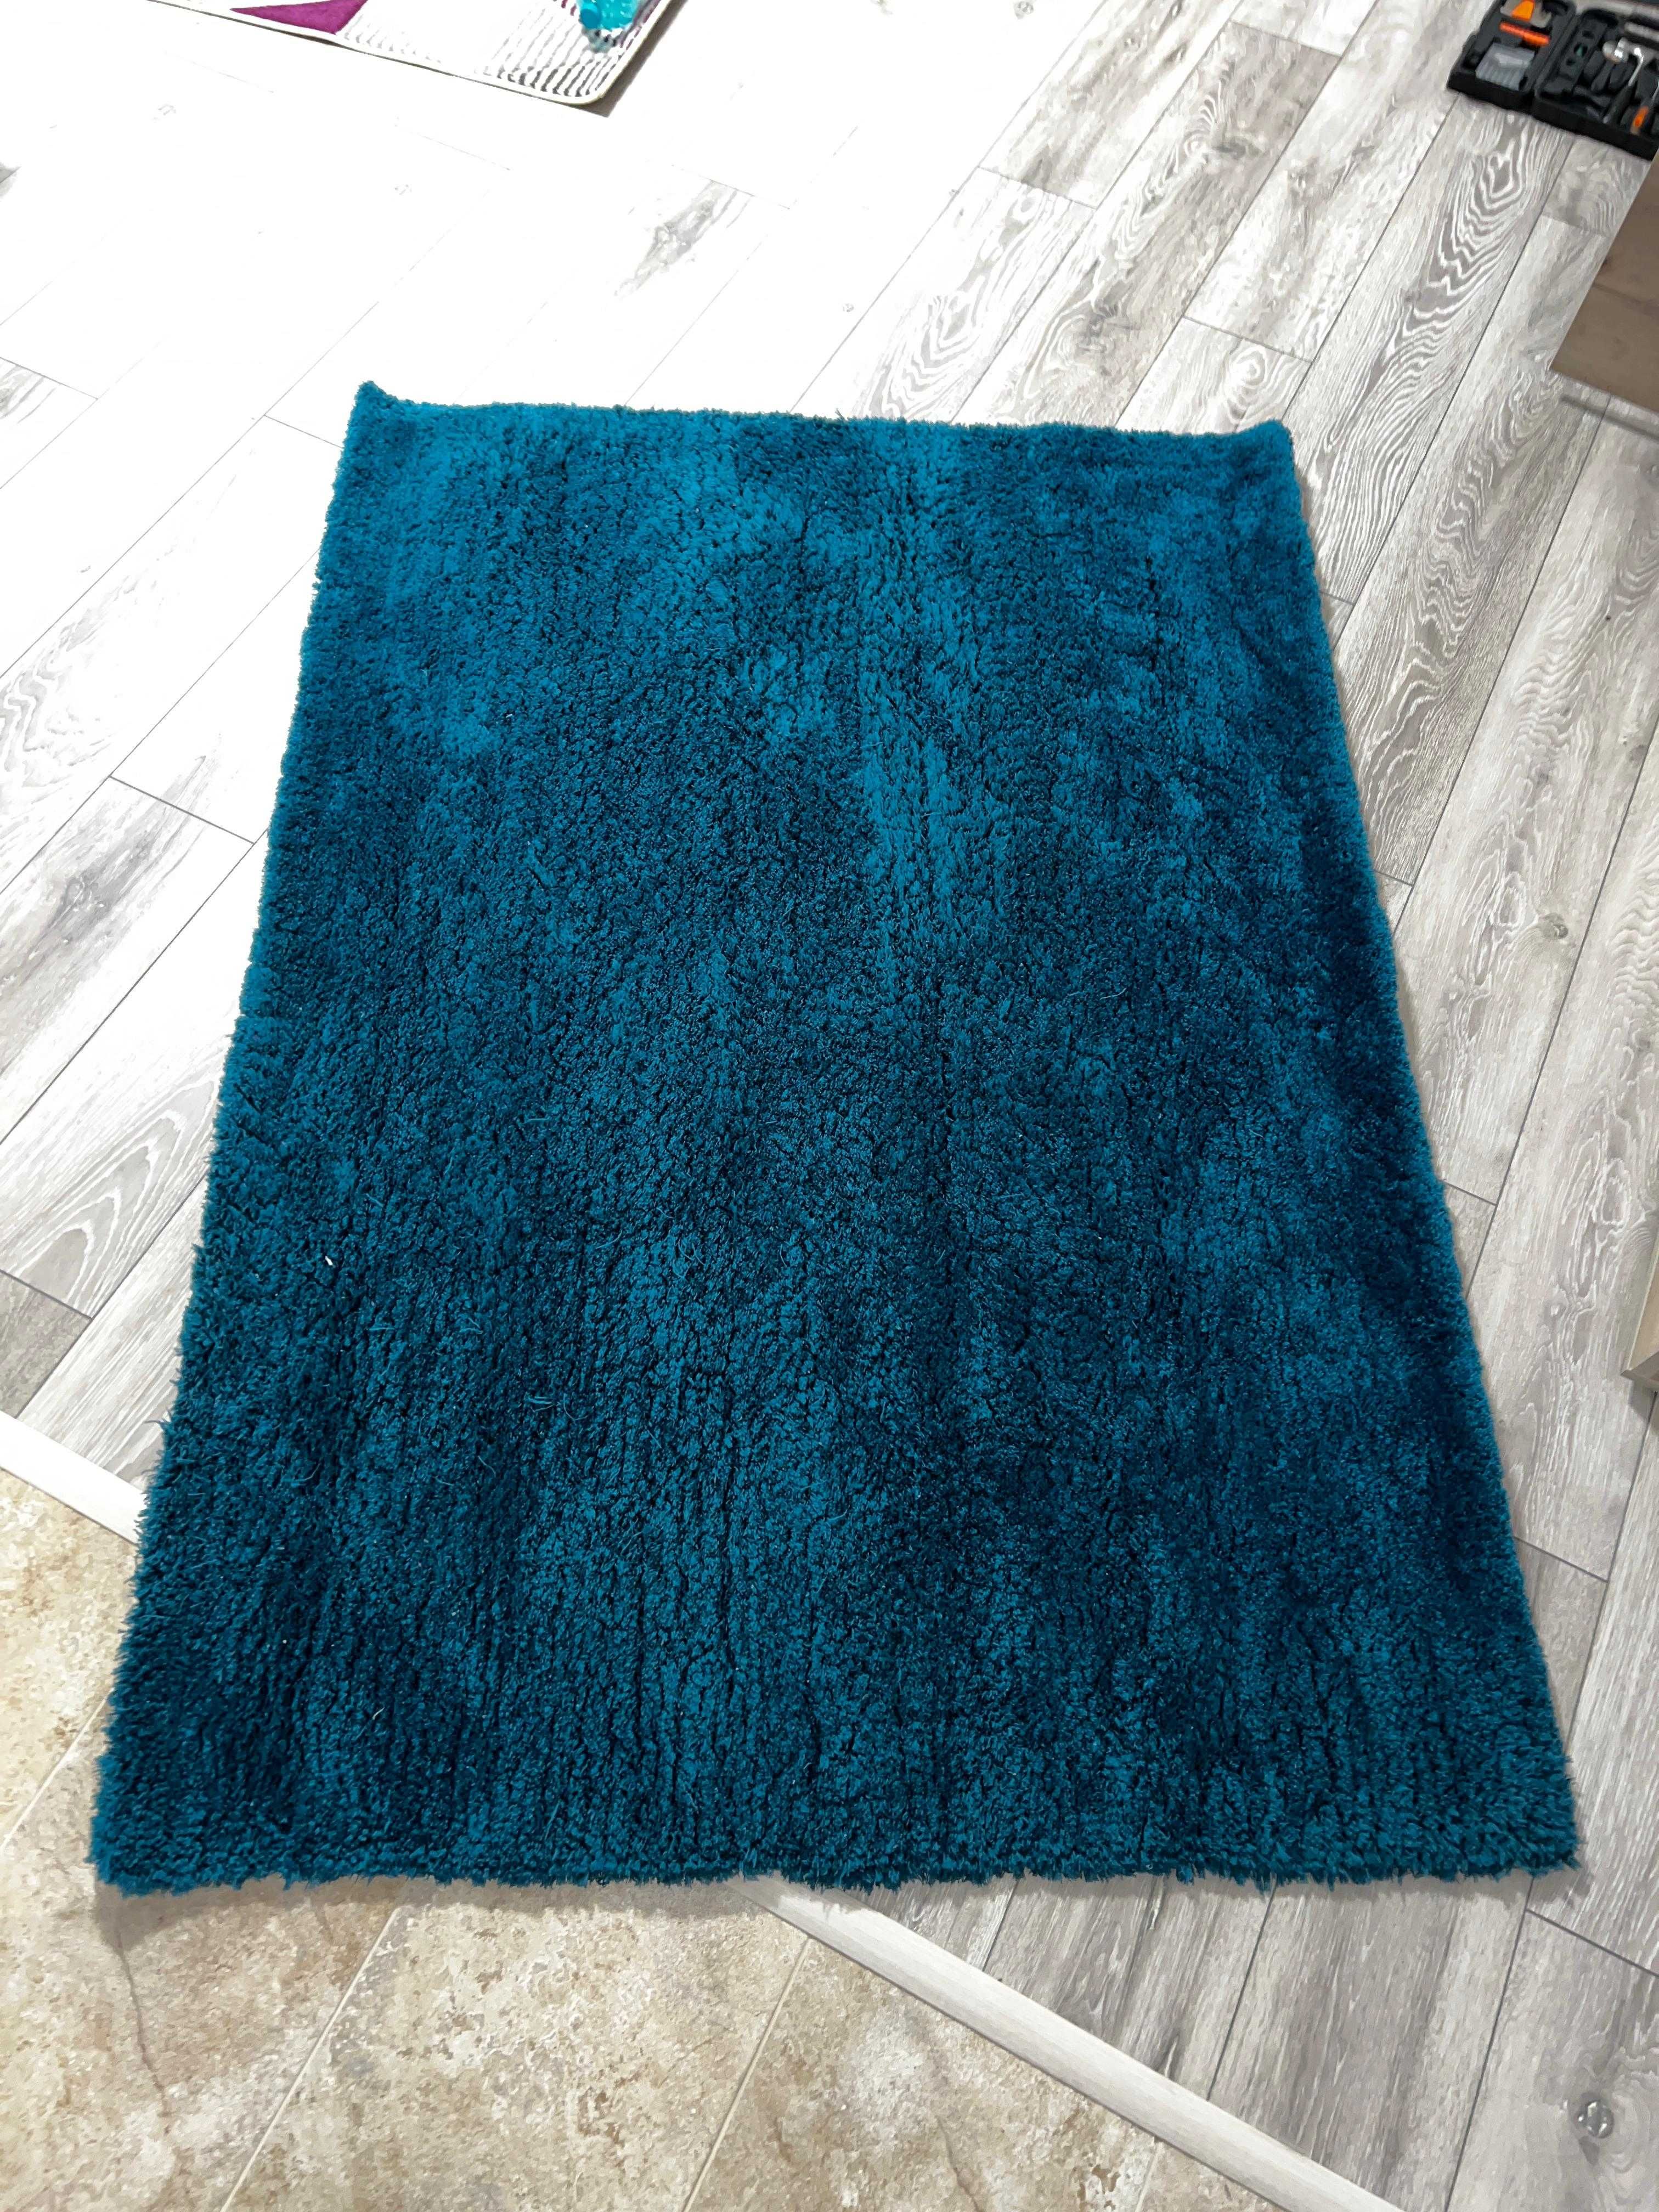 Covor Turquoise / Albastru cu fir lung - 170x120 cm - Livrare gratuita